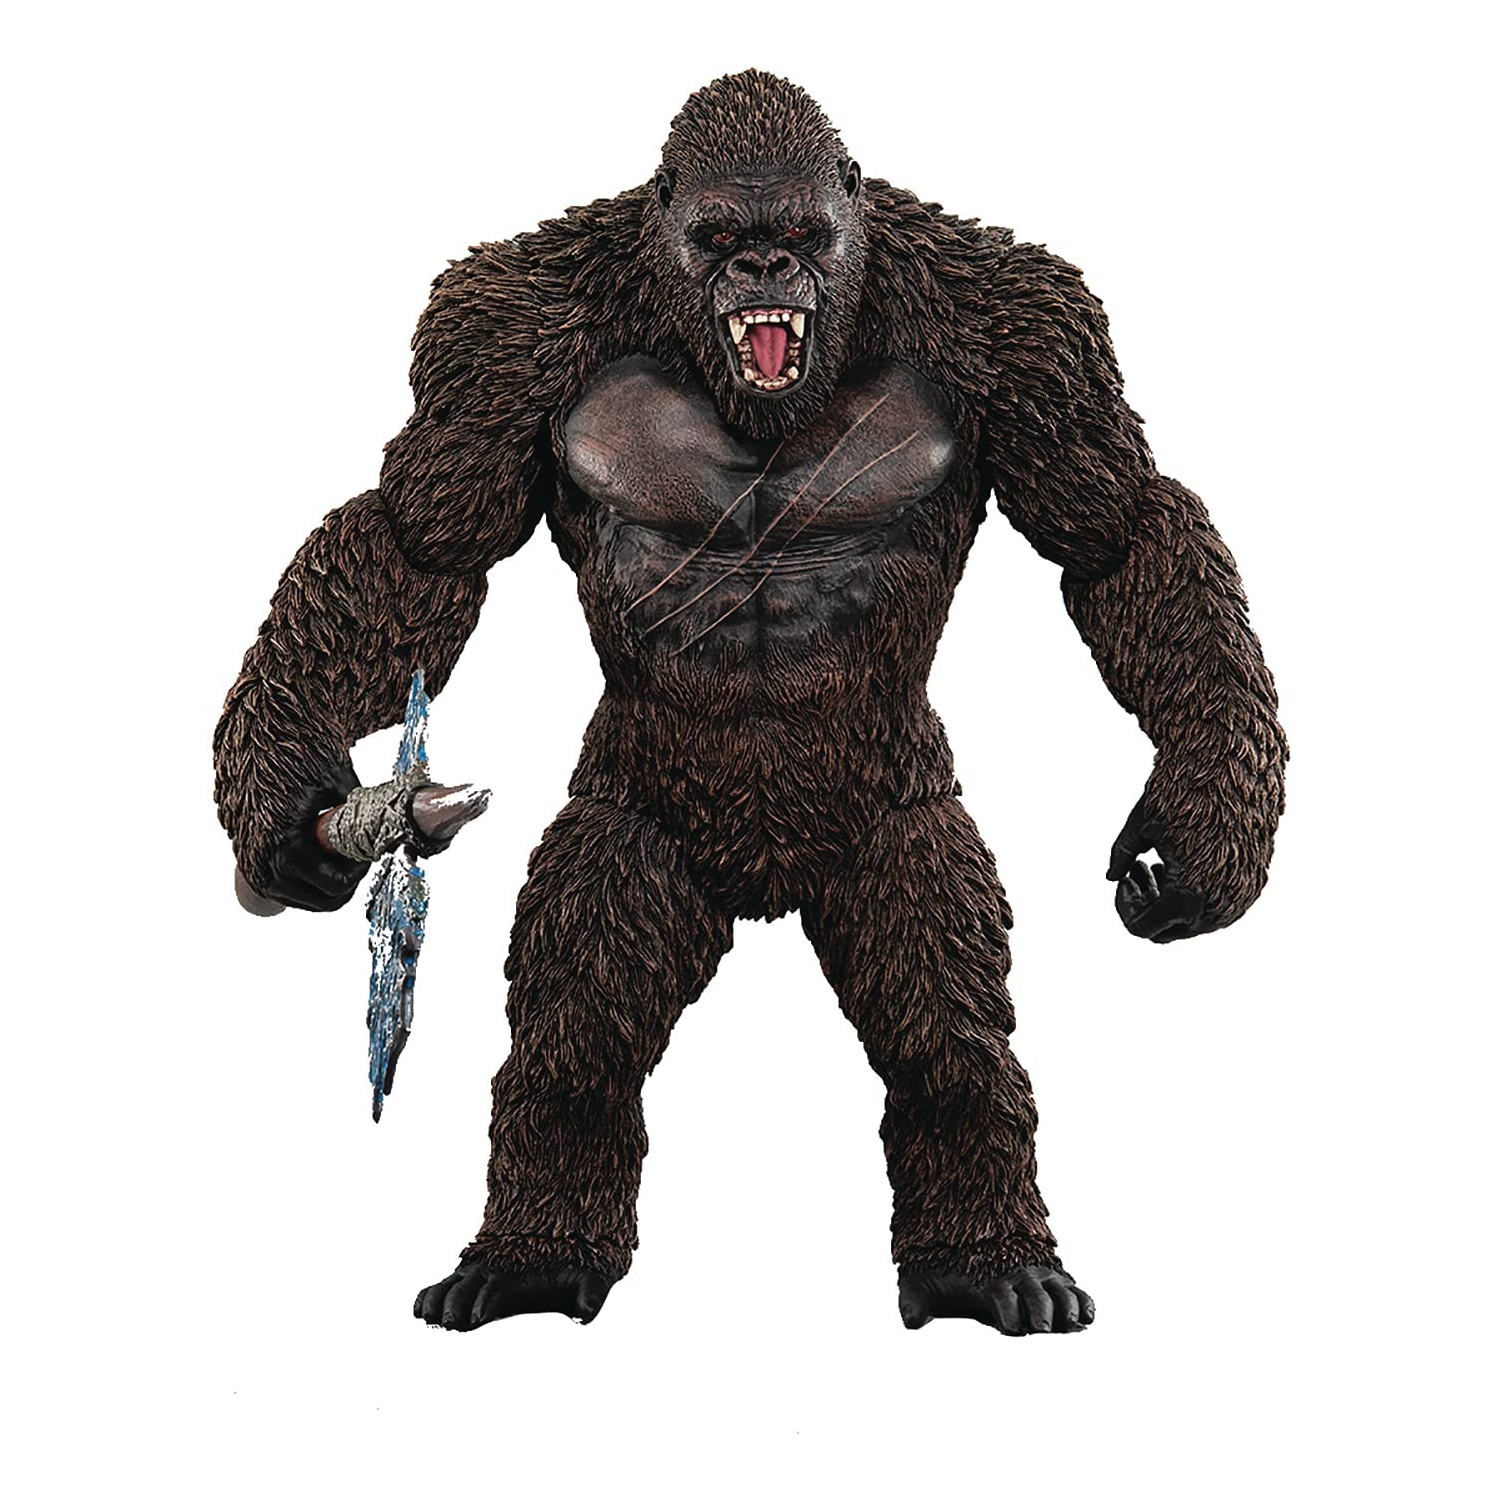 Megahouse Action Figure - Godzilla Vs Kong 2021 - Monsters Kong